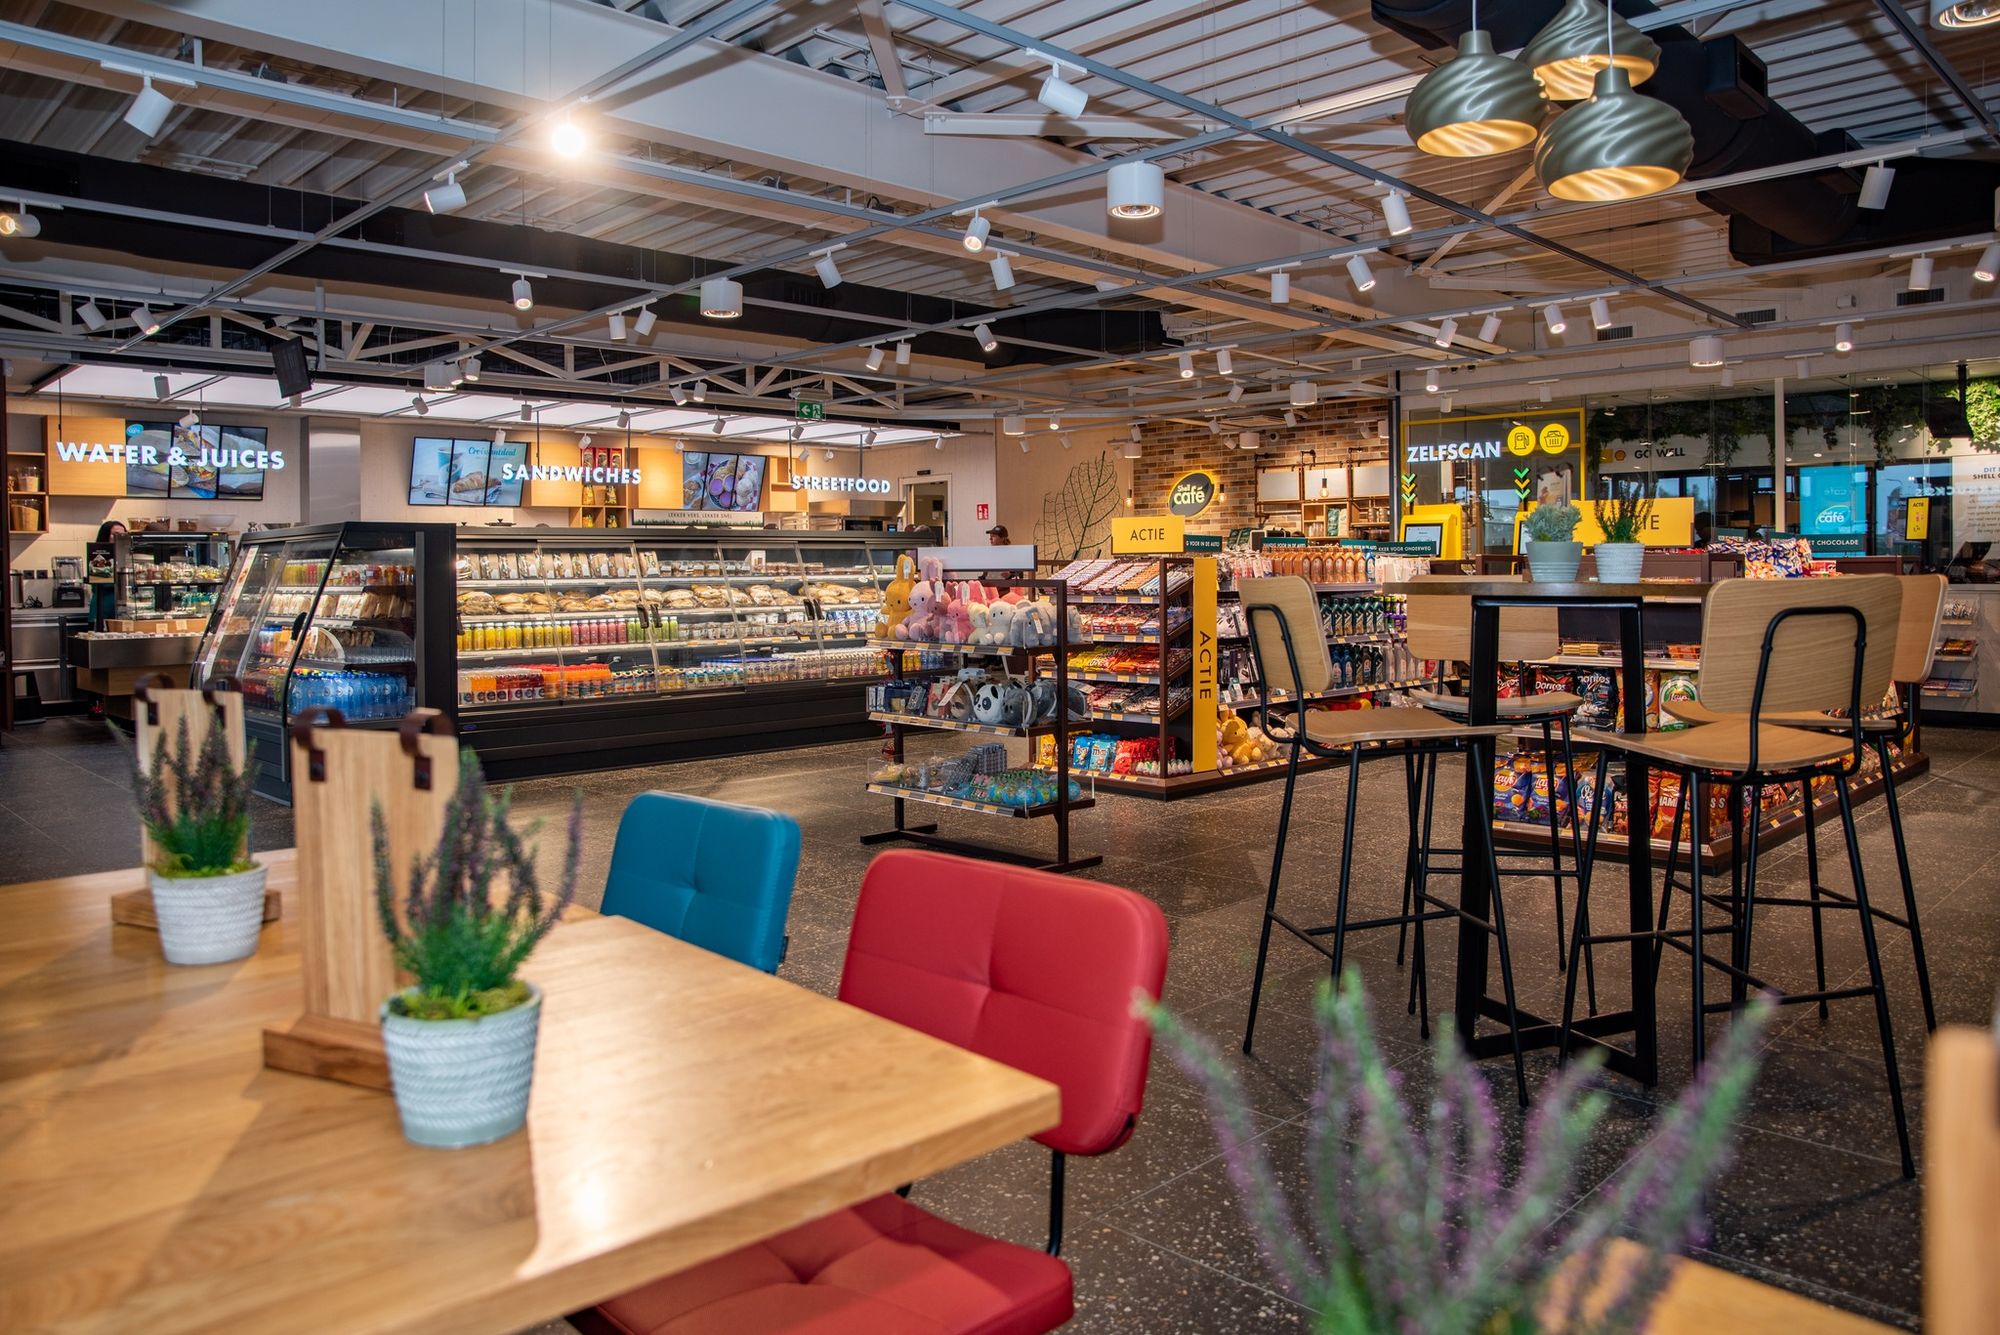  Shell Café на АЗС Shell (Нидерланды) имеет пекарню и фреш-бар с уличной едой